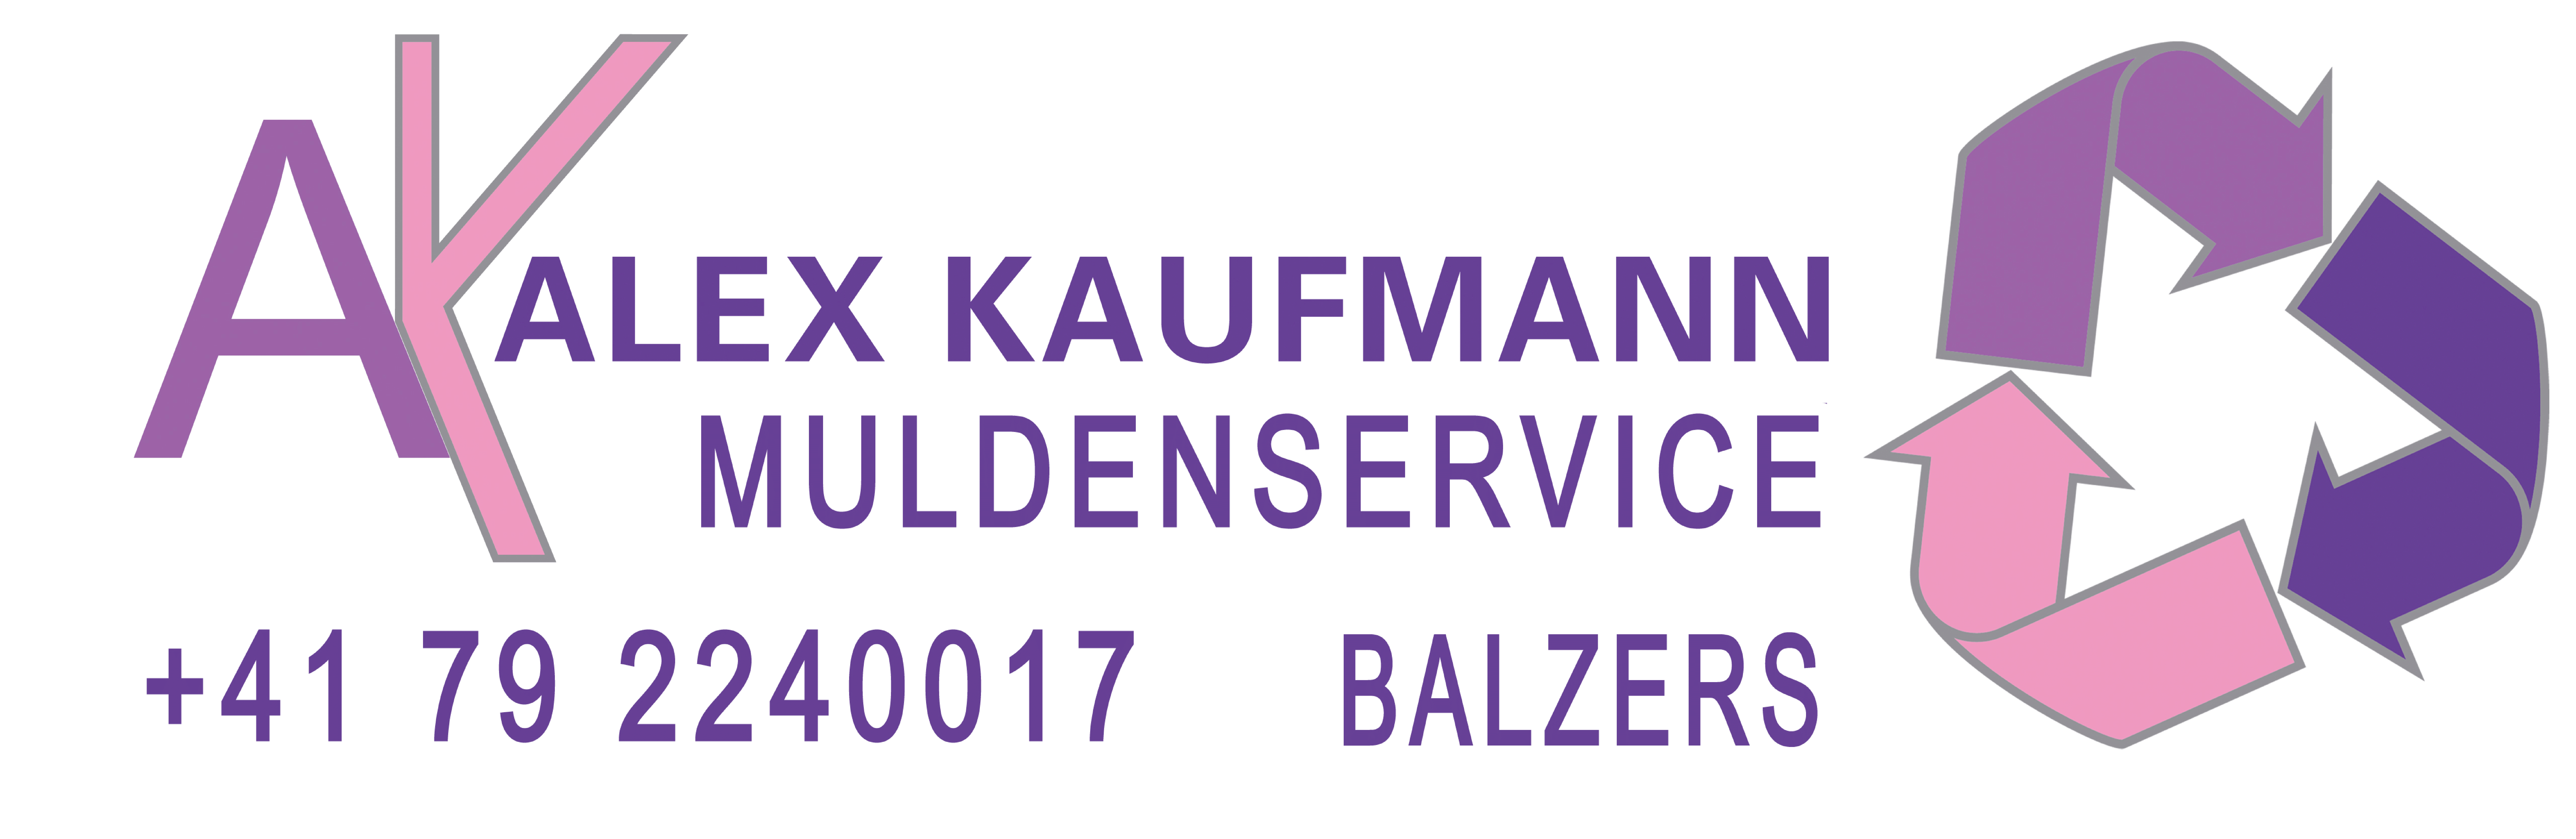 AK Logo Muldenservice